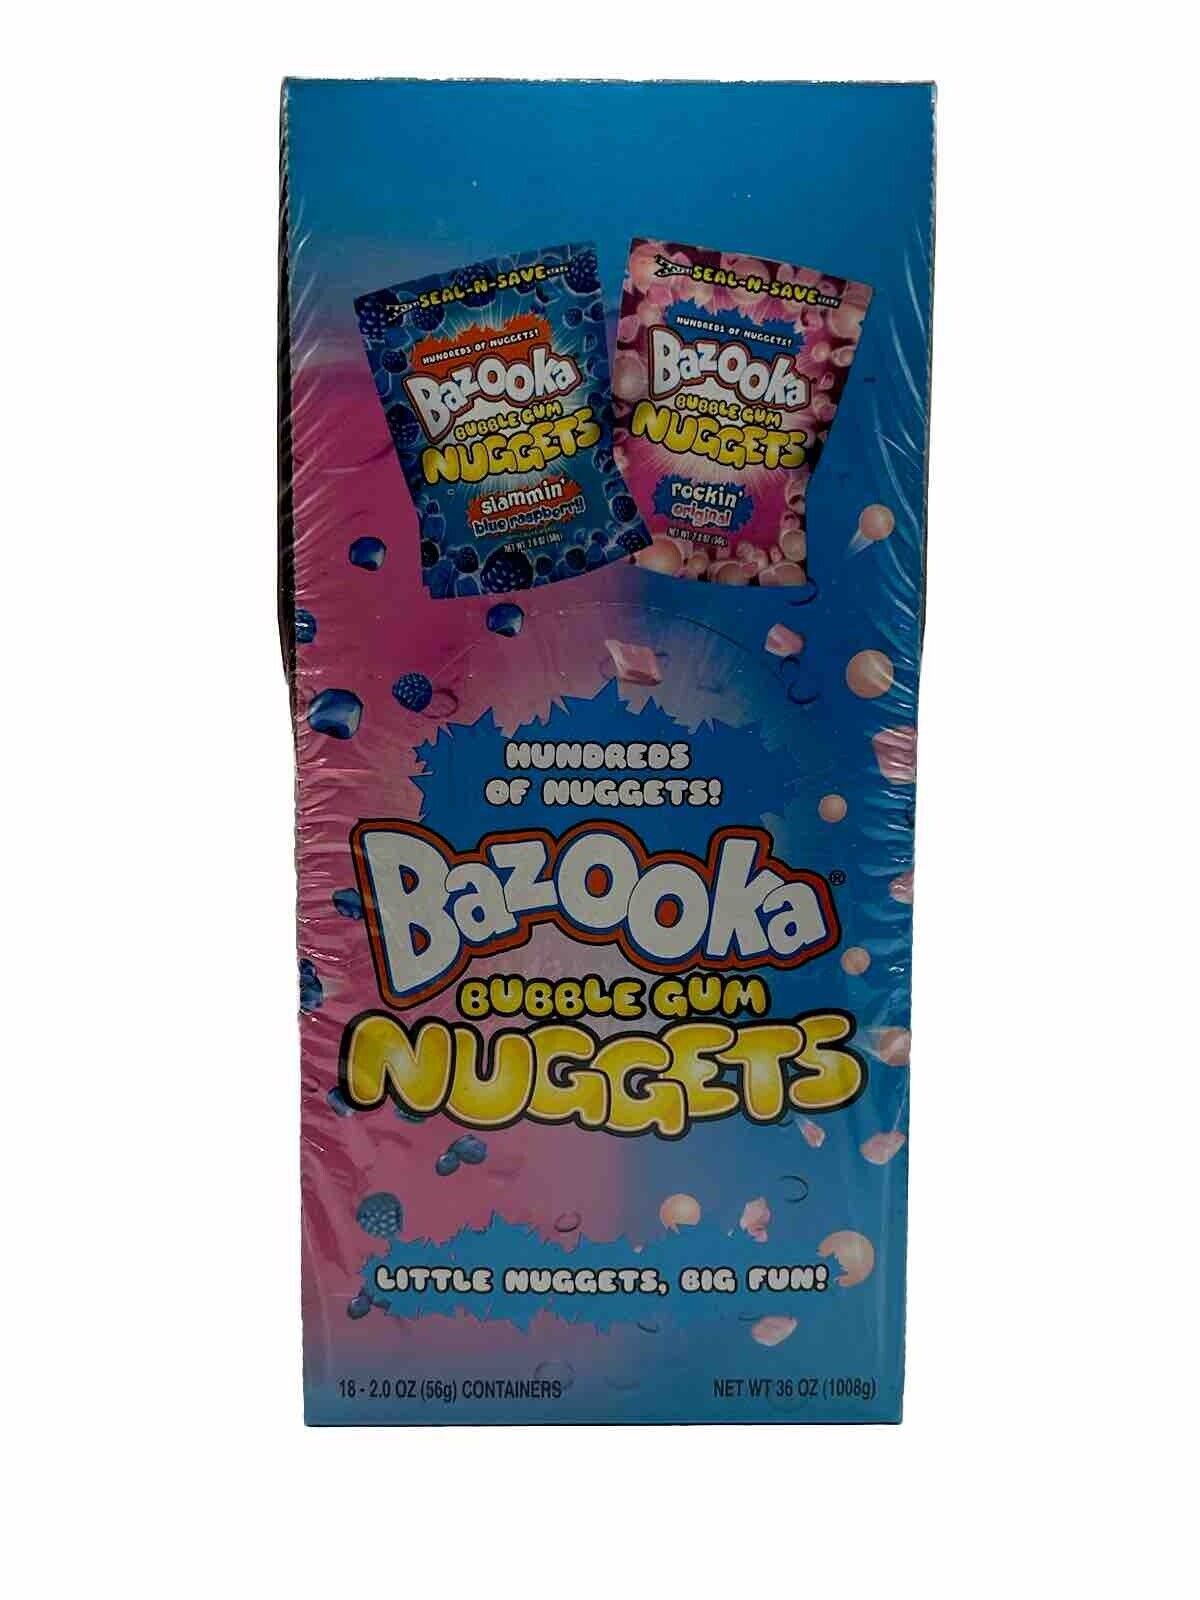 HTF Rare 2010 BAZOOKA Bubble Gum Nuggets Sealed Box. Exp 11/12. Collector Item